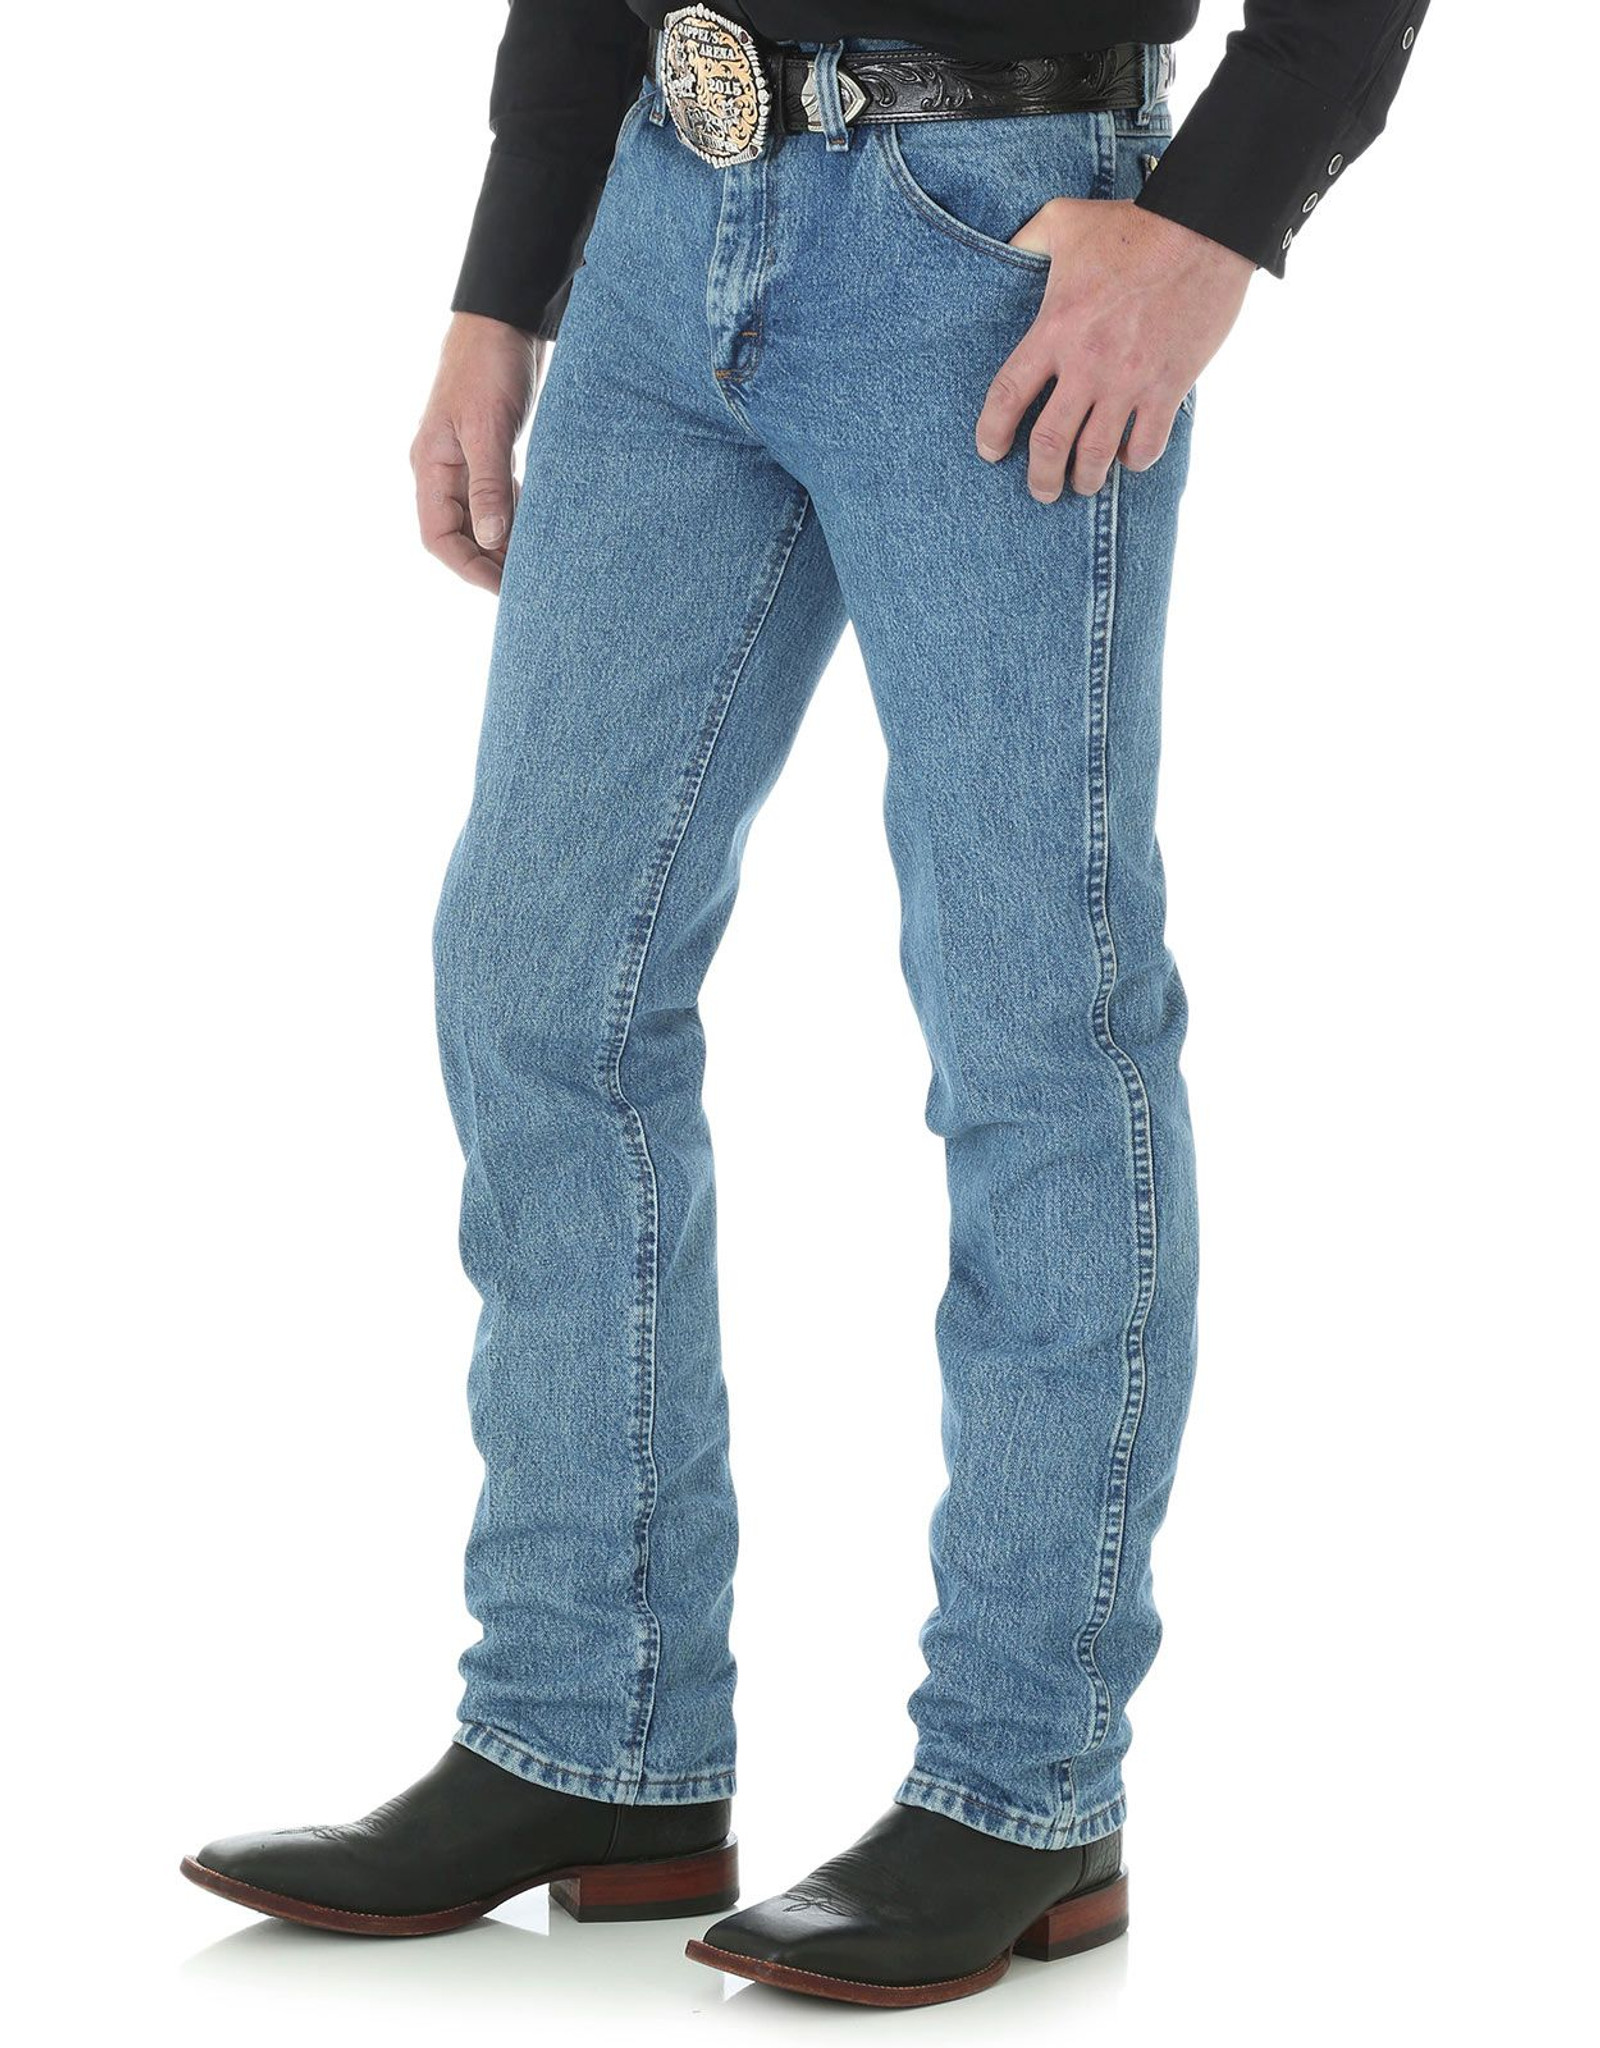 Wrangler Men's 36 Slim Mid Rise Slim Fit Boot Cut Jeans - Stonewash